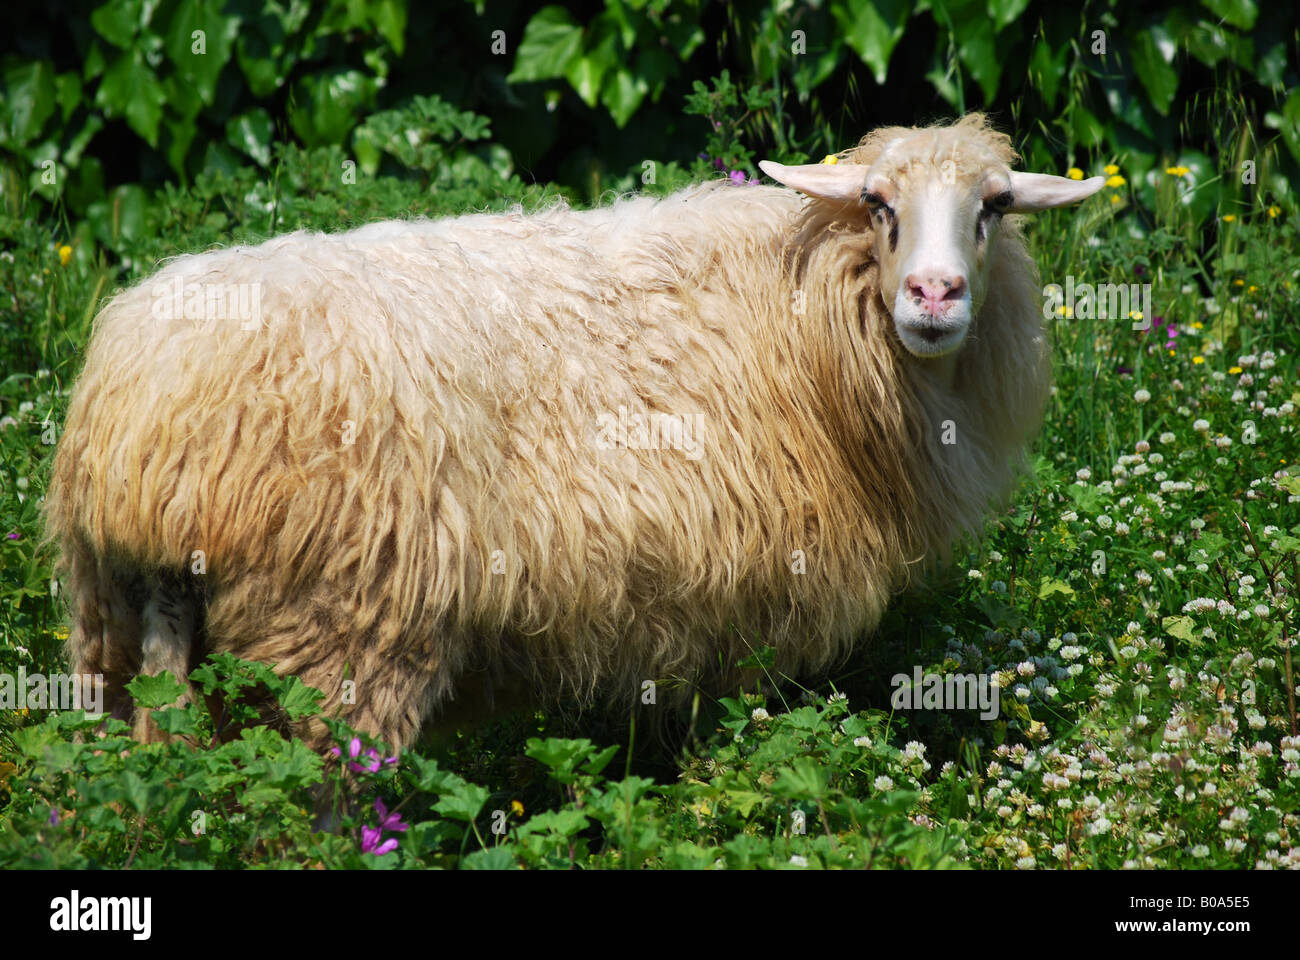 A domestic sheep Stock Photo